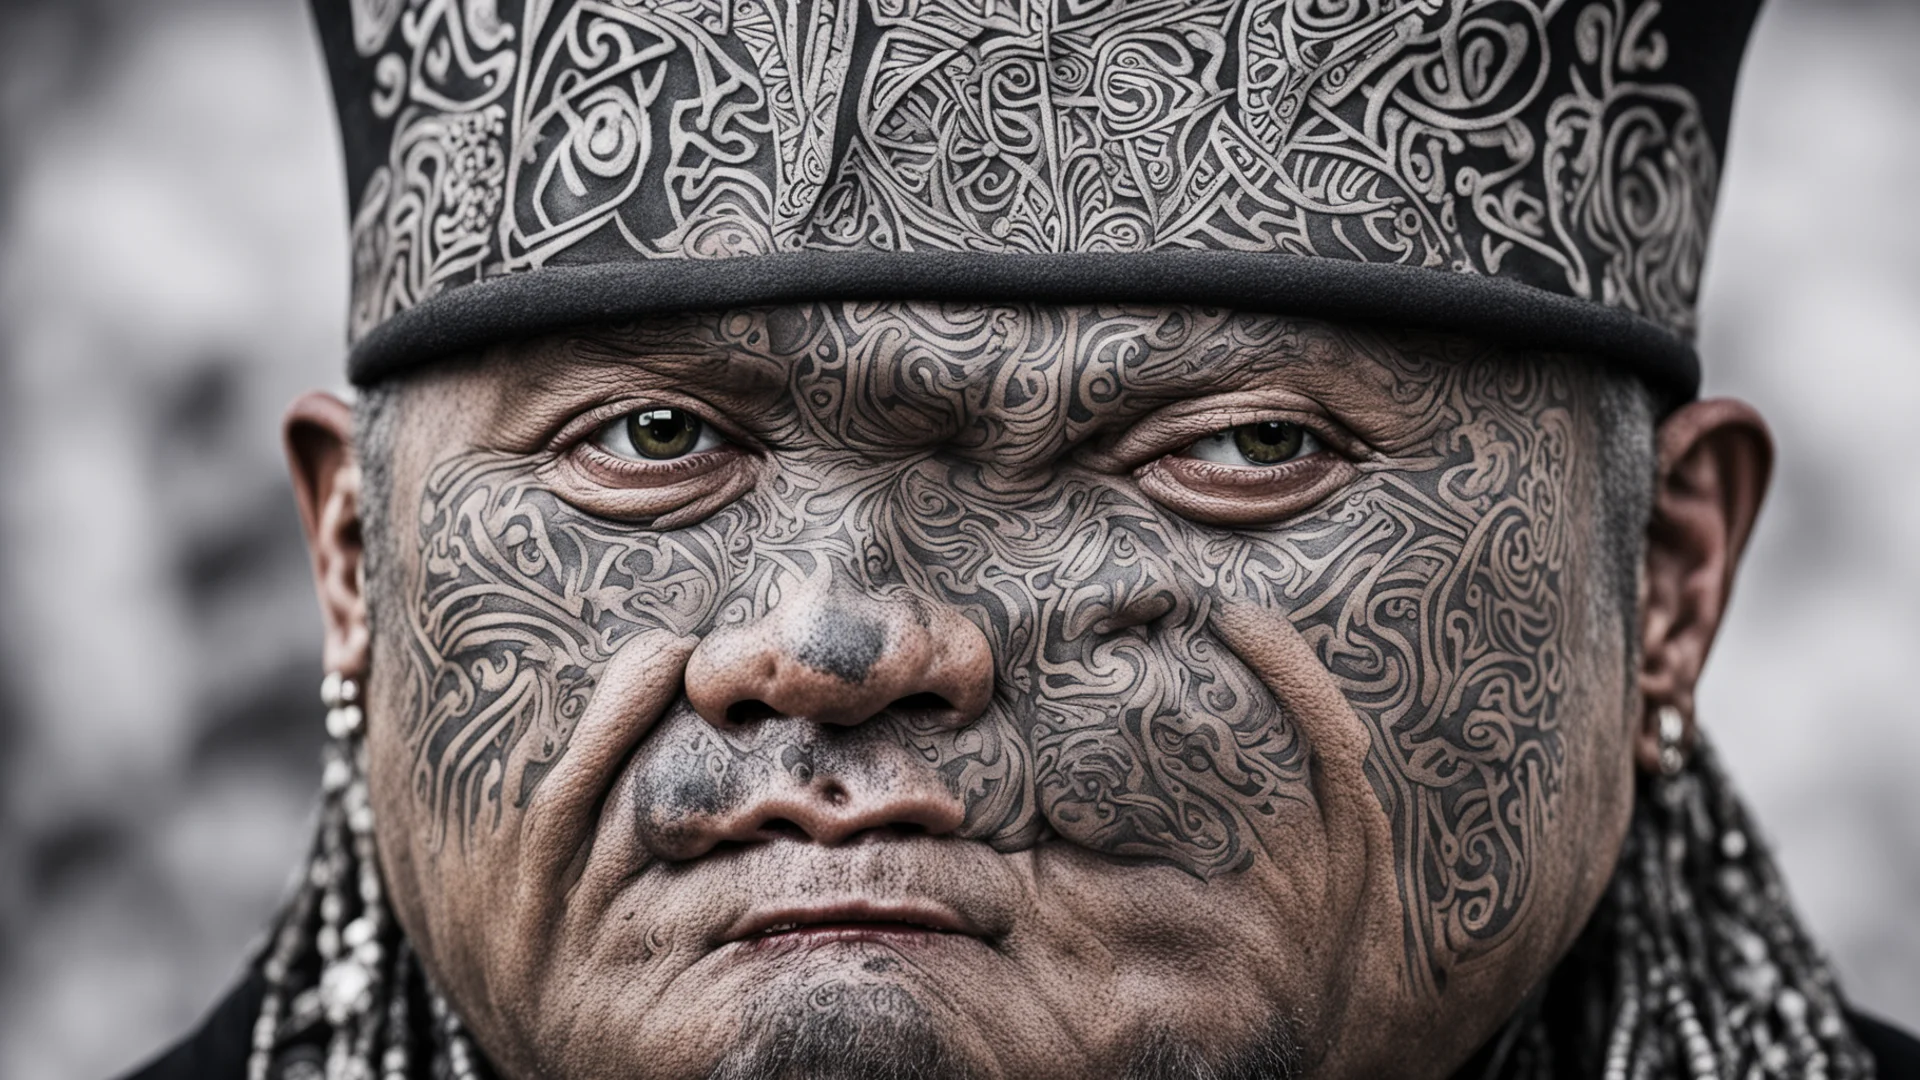 maori cheif moko facial tatoos menacing close up face top hat amazing awesome portrait 2 wide